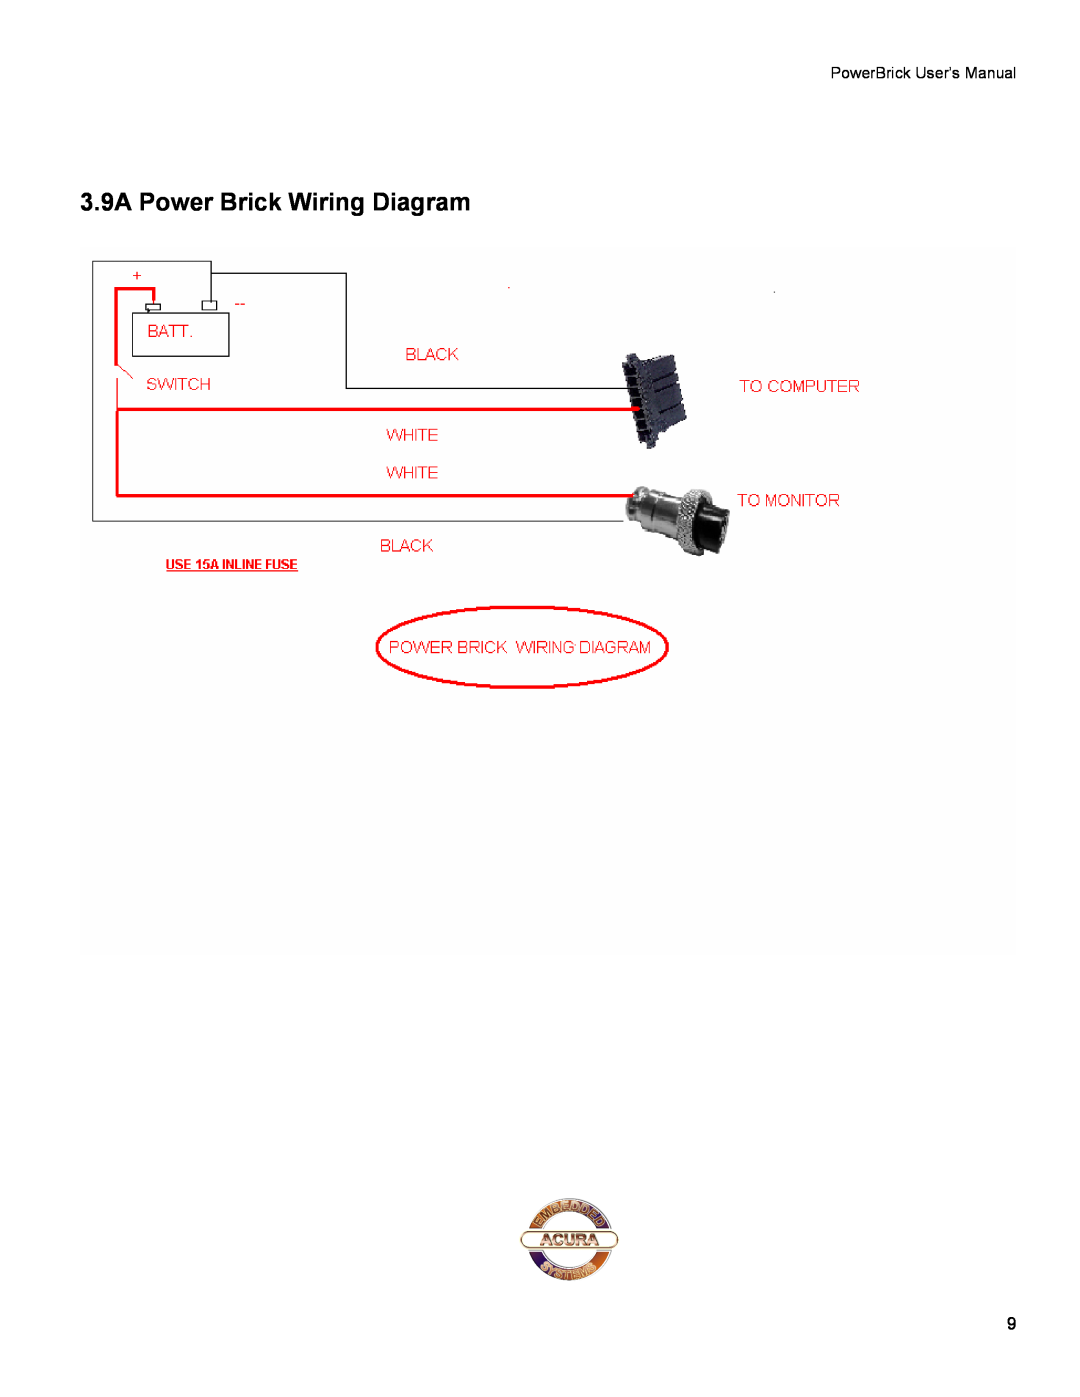 Acura Embedded Small footprint rugged Pentium-M user manual 3.9A Power Brick Wiring Diagram, PowerBrick User’s Manual 